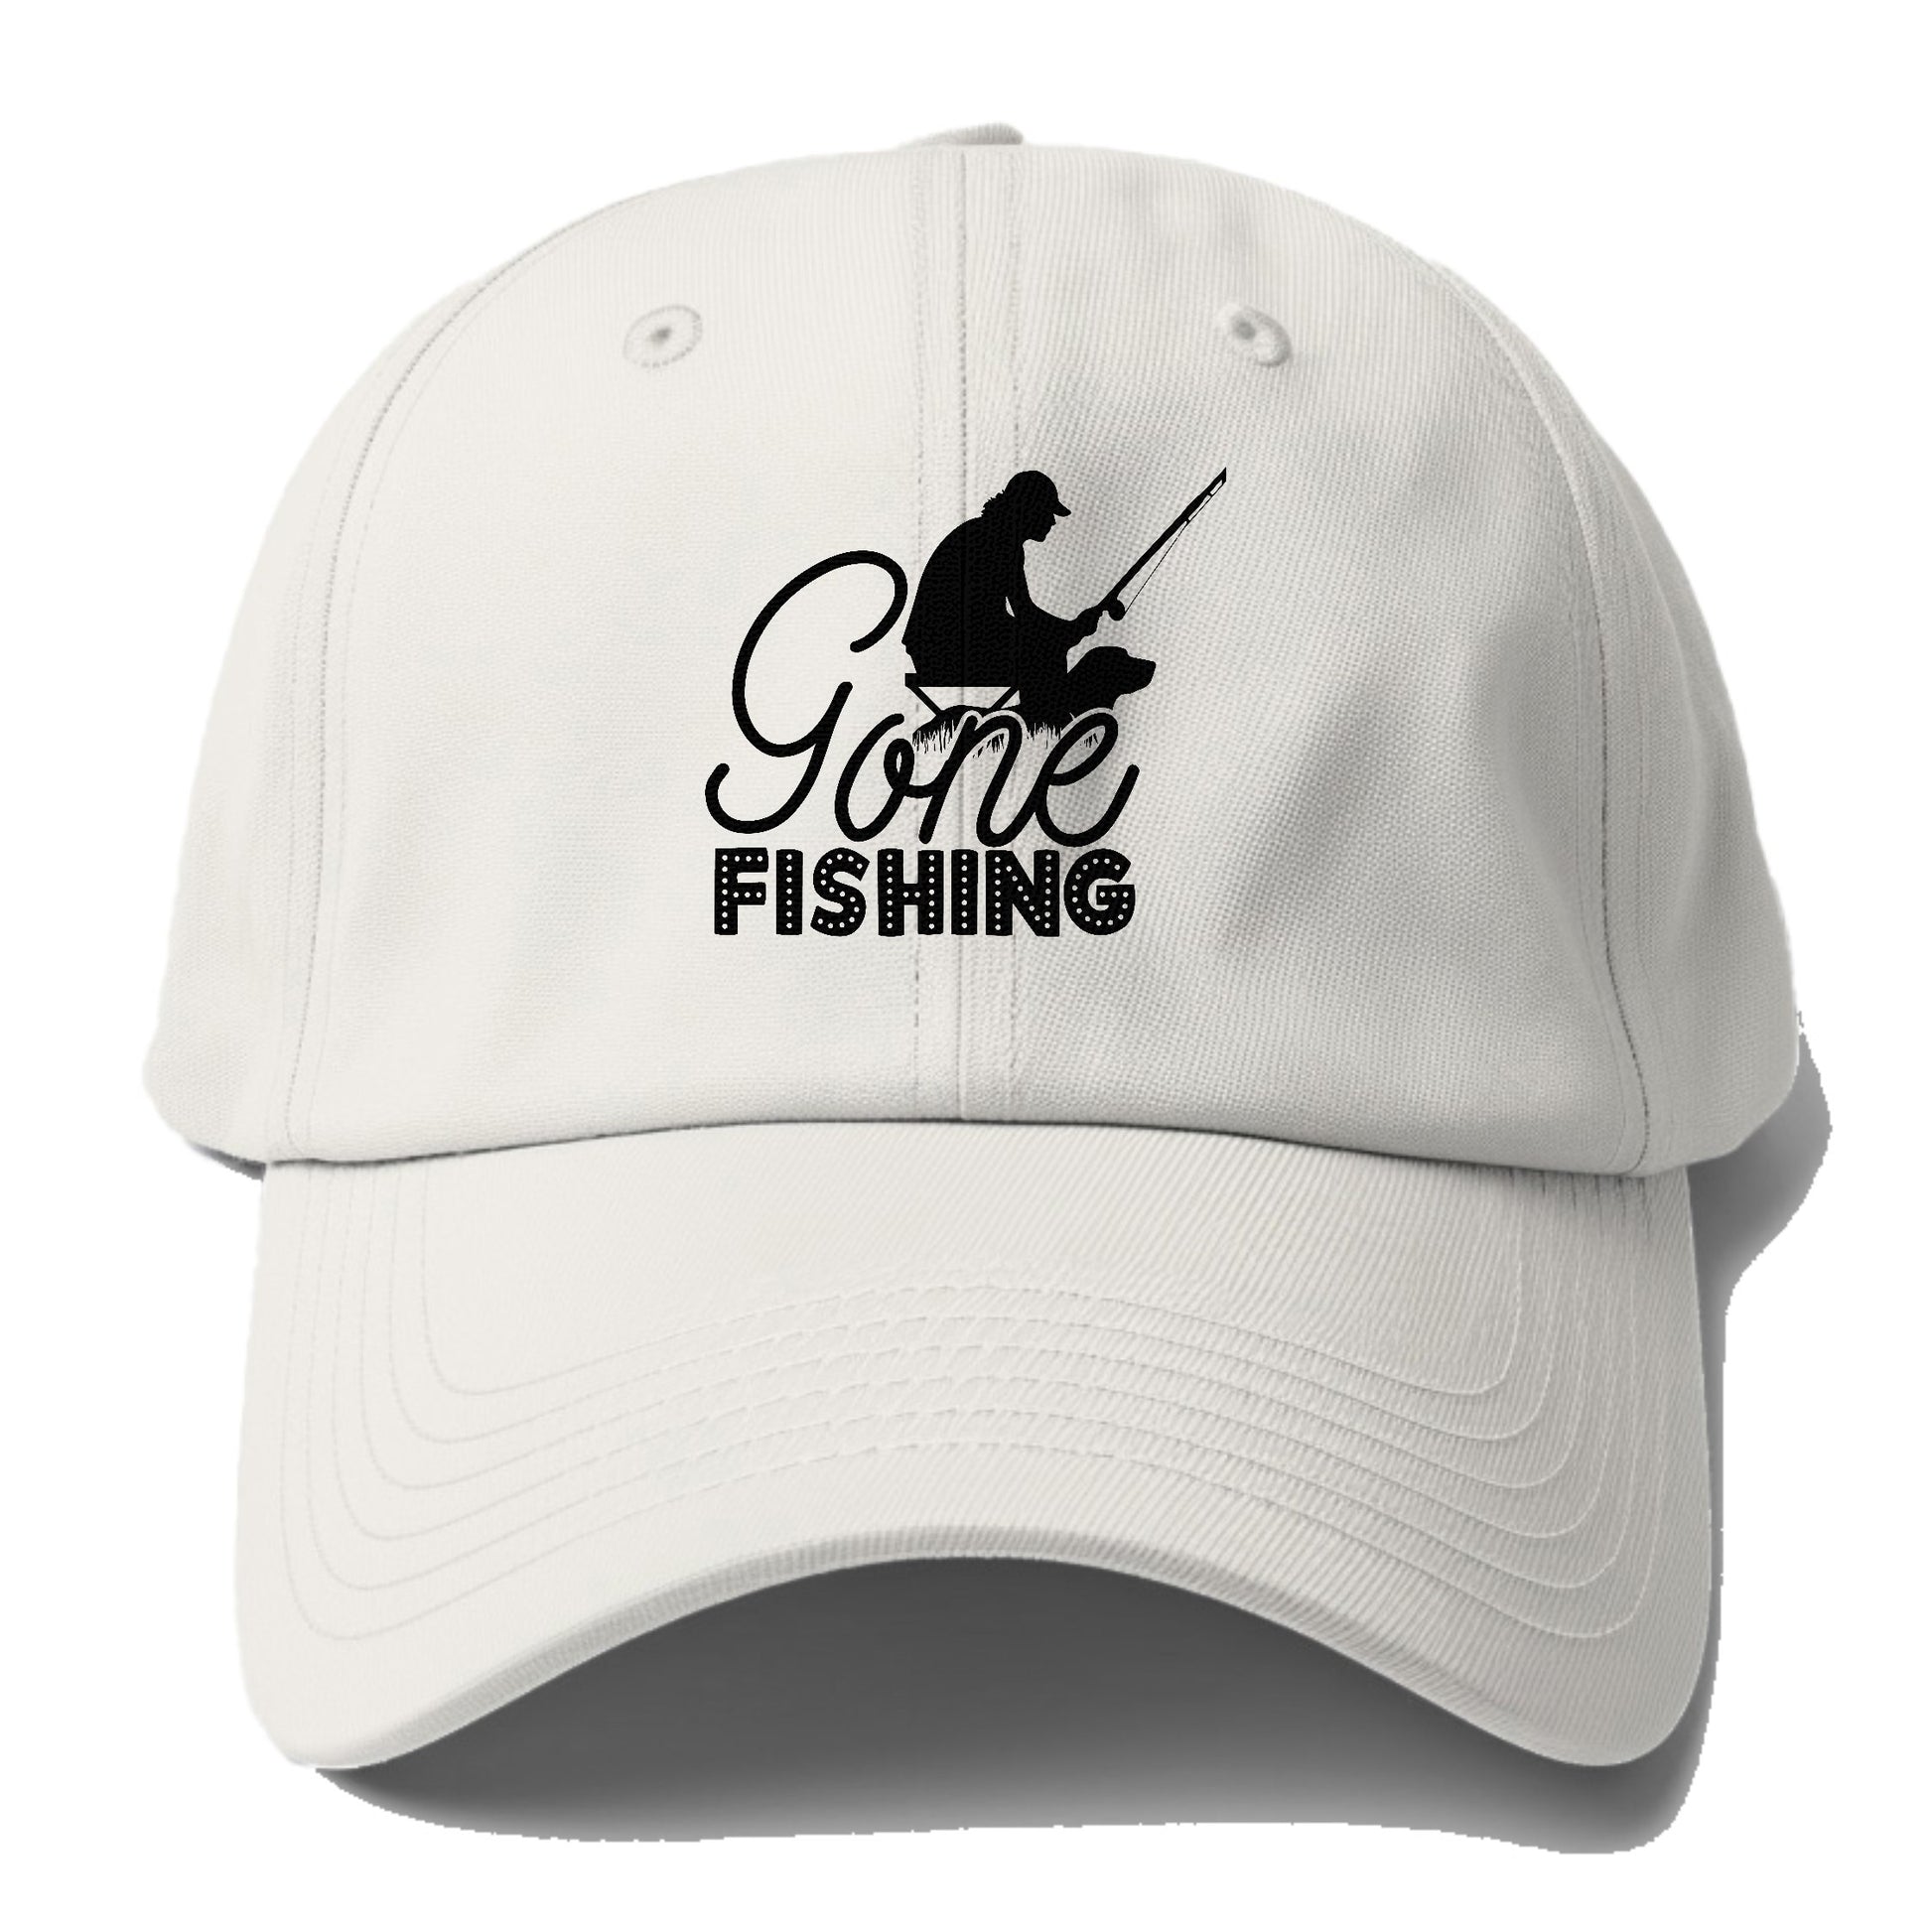 Gone Fishing Baseball Cap Twilight Navy(Blue)